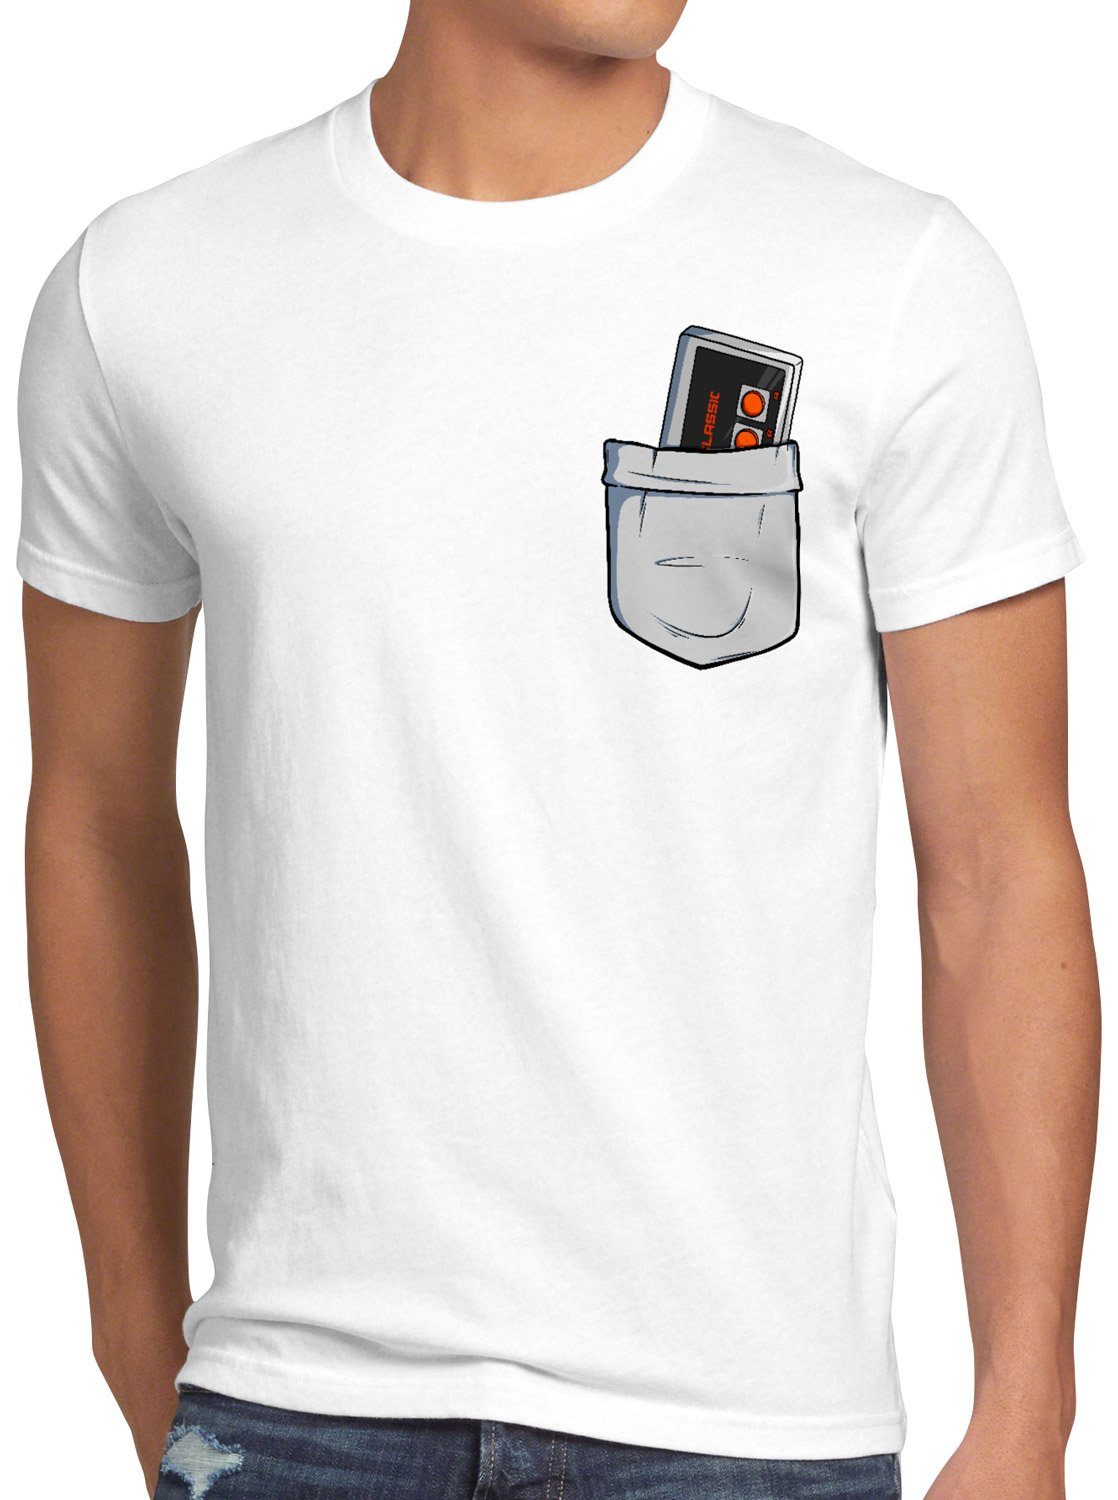 NES classic Print-Shirt Brusttasche style3 Herren T-Shirt 8-Bit konsole